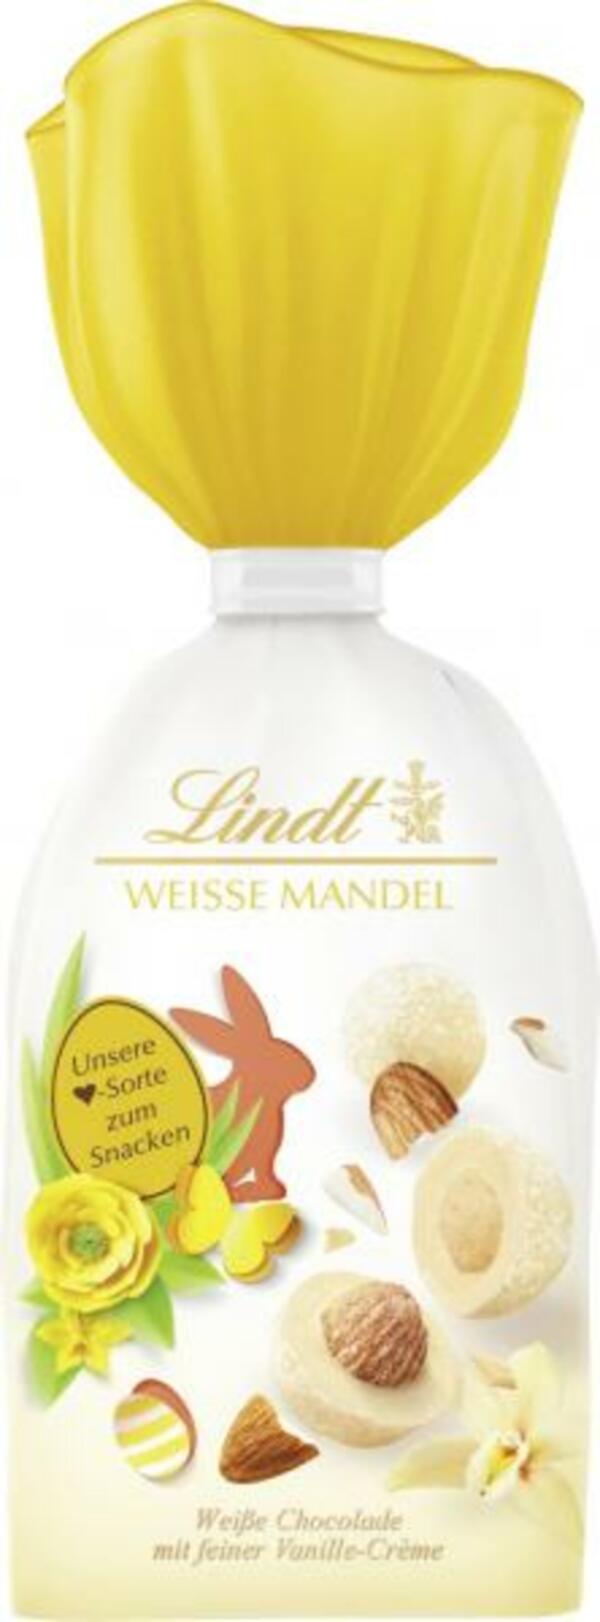 Bild 1 von Lindt Frühlings-Mandeln Weisse Mandel Vanille-Crème